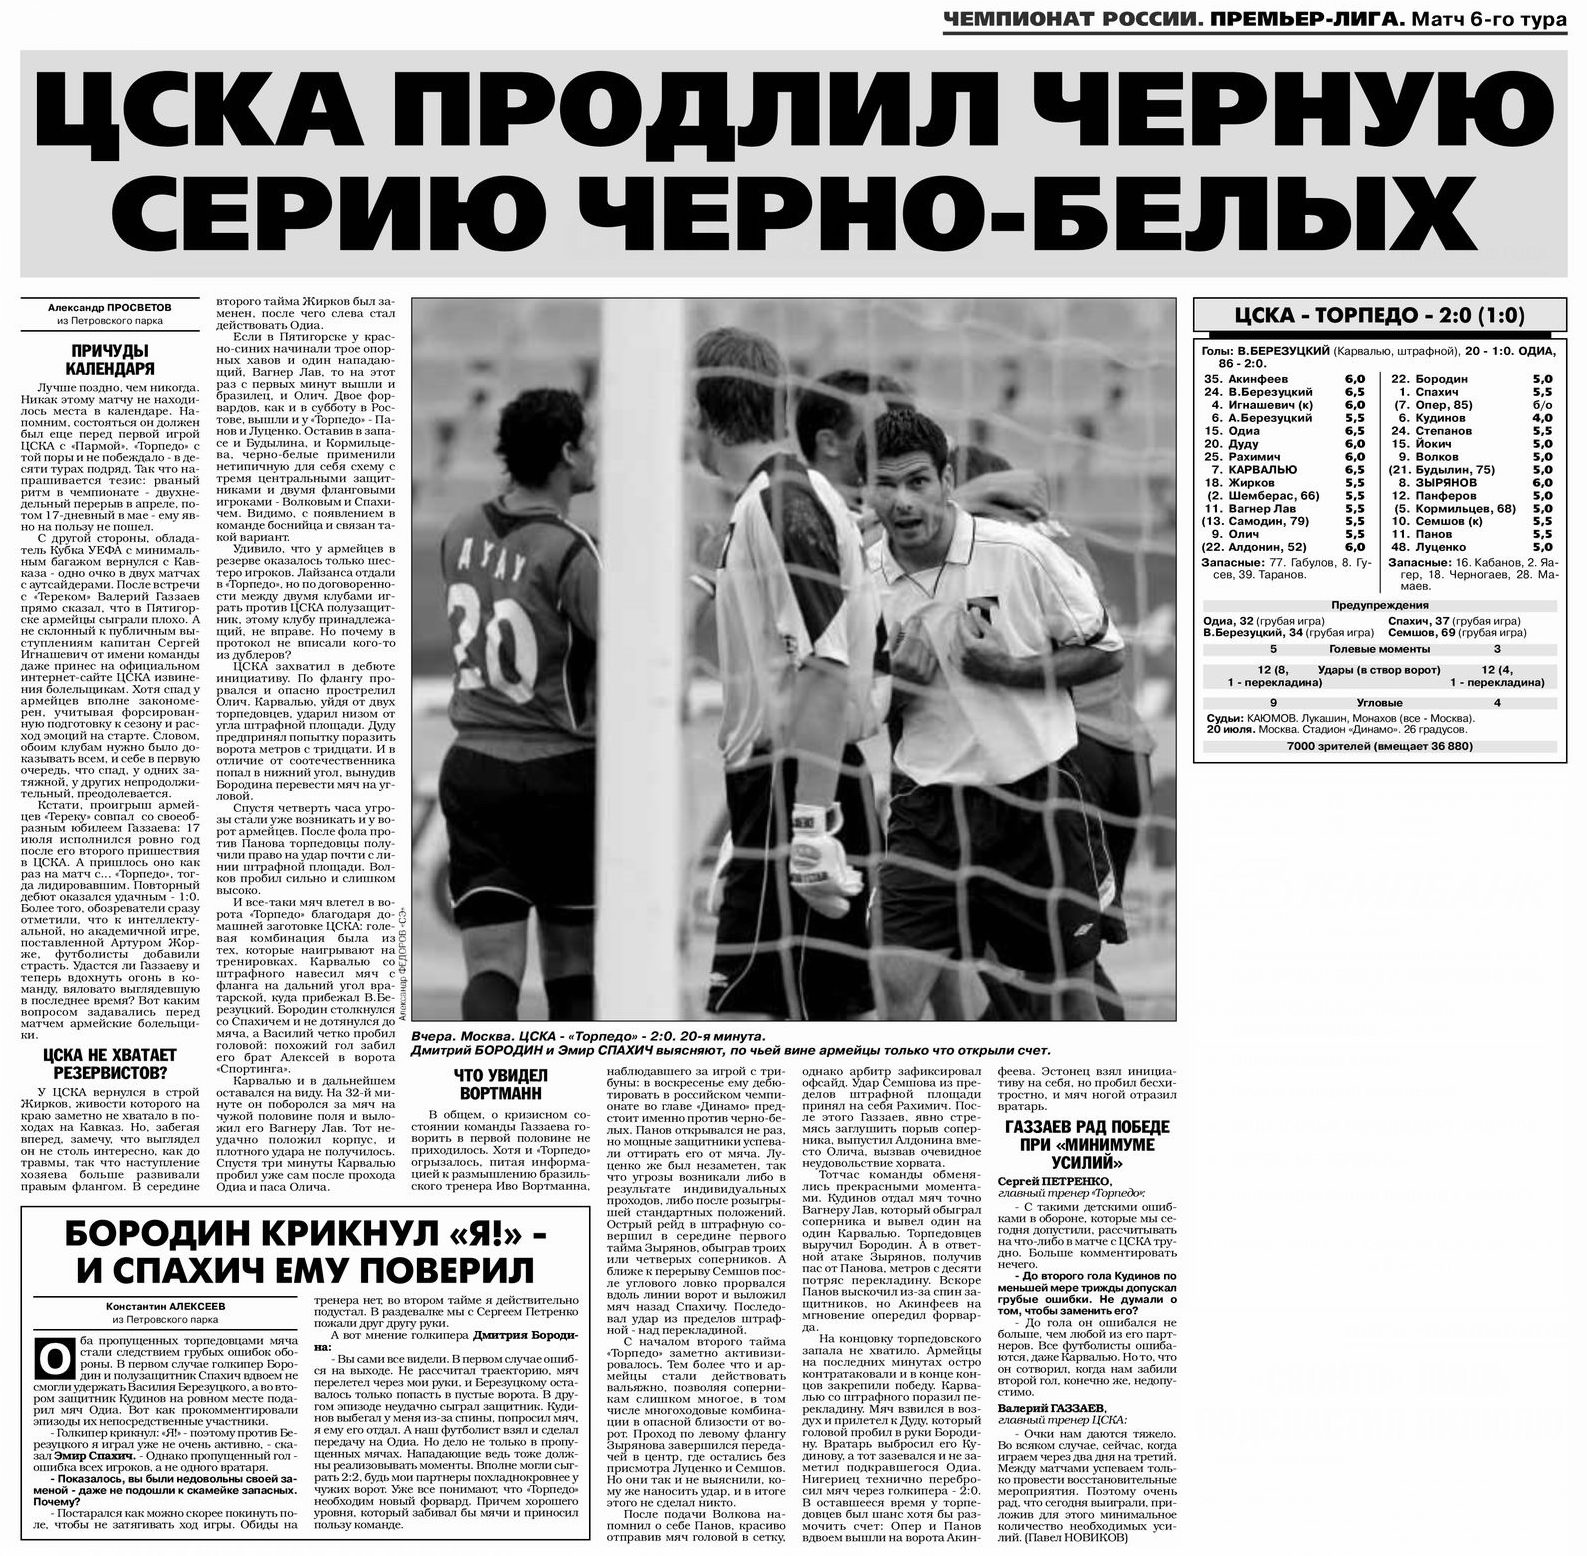 2005-07-20.CSKA-TorpedoM.2